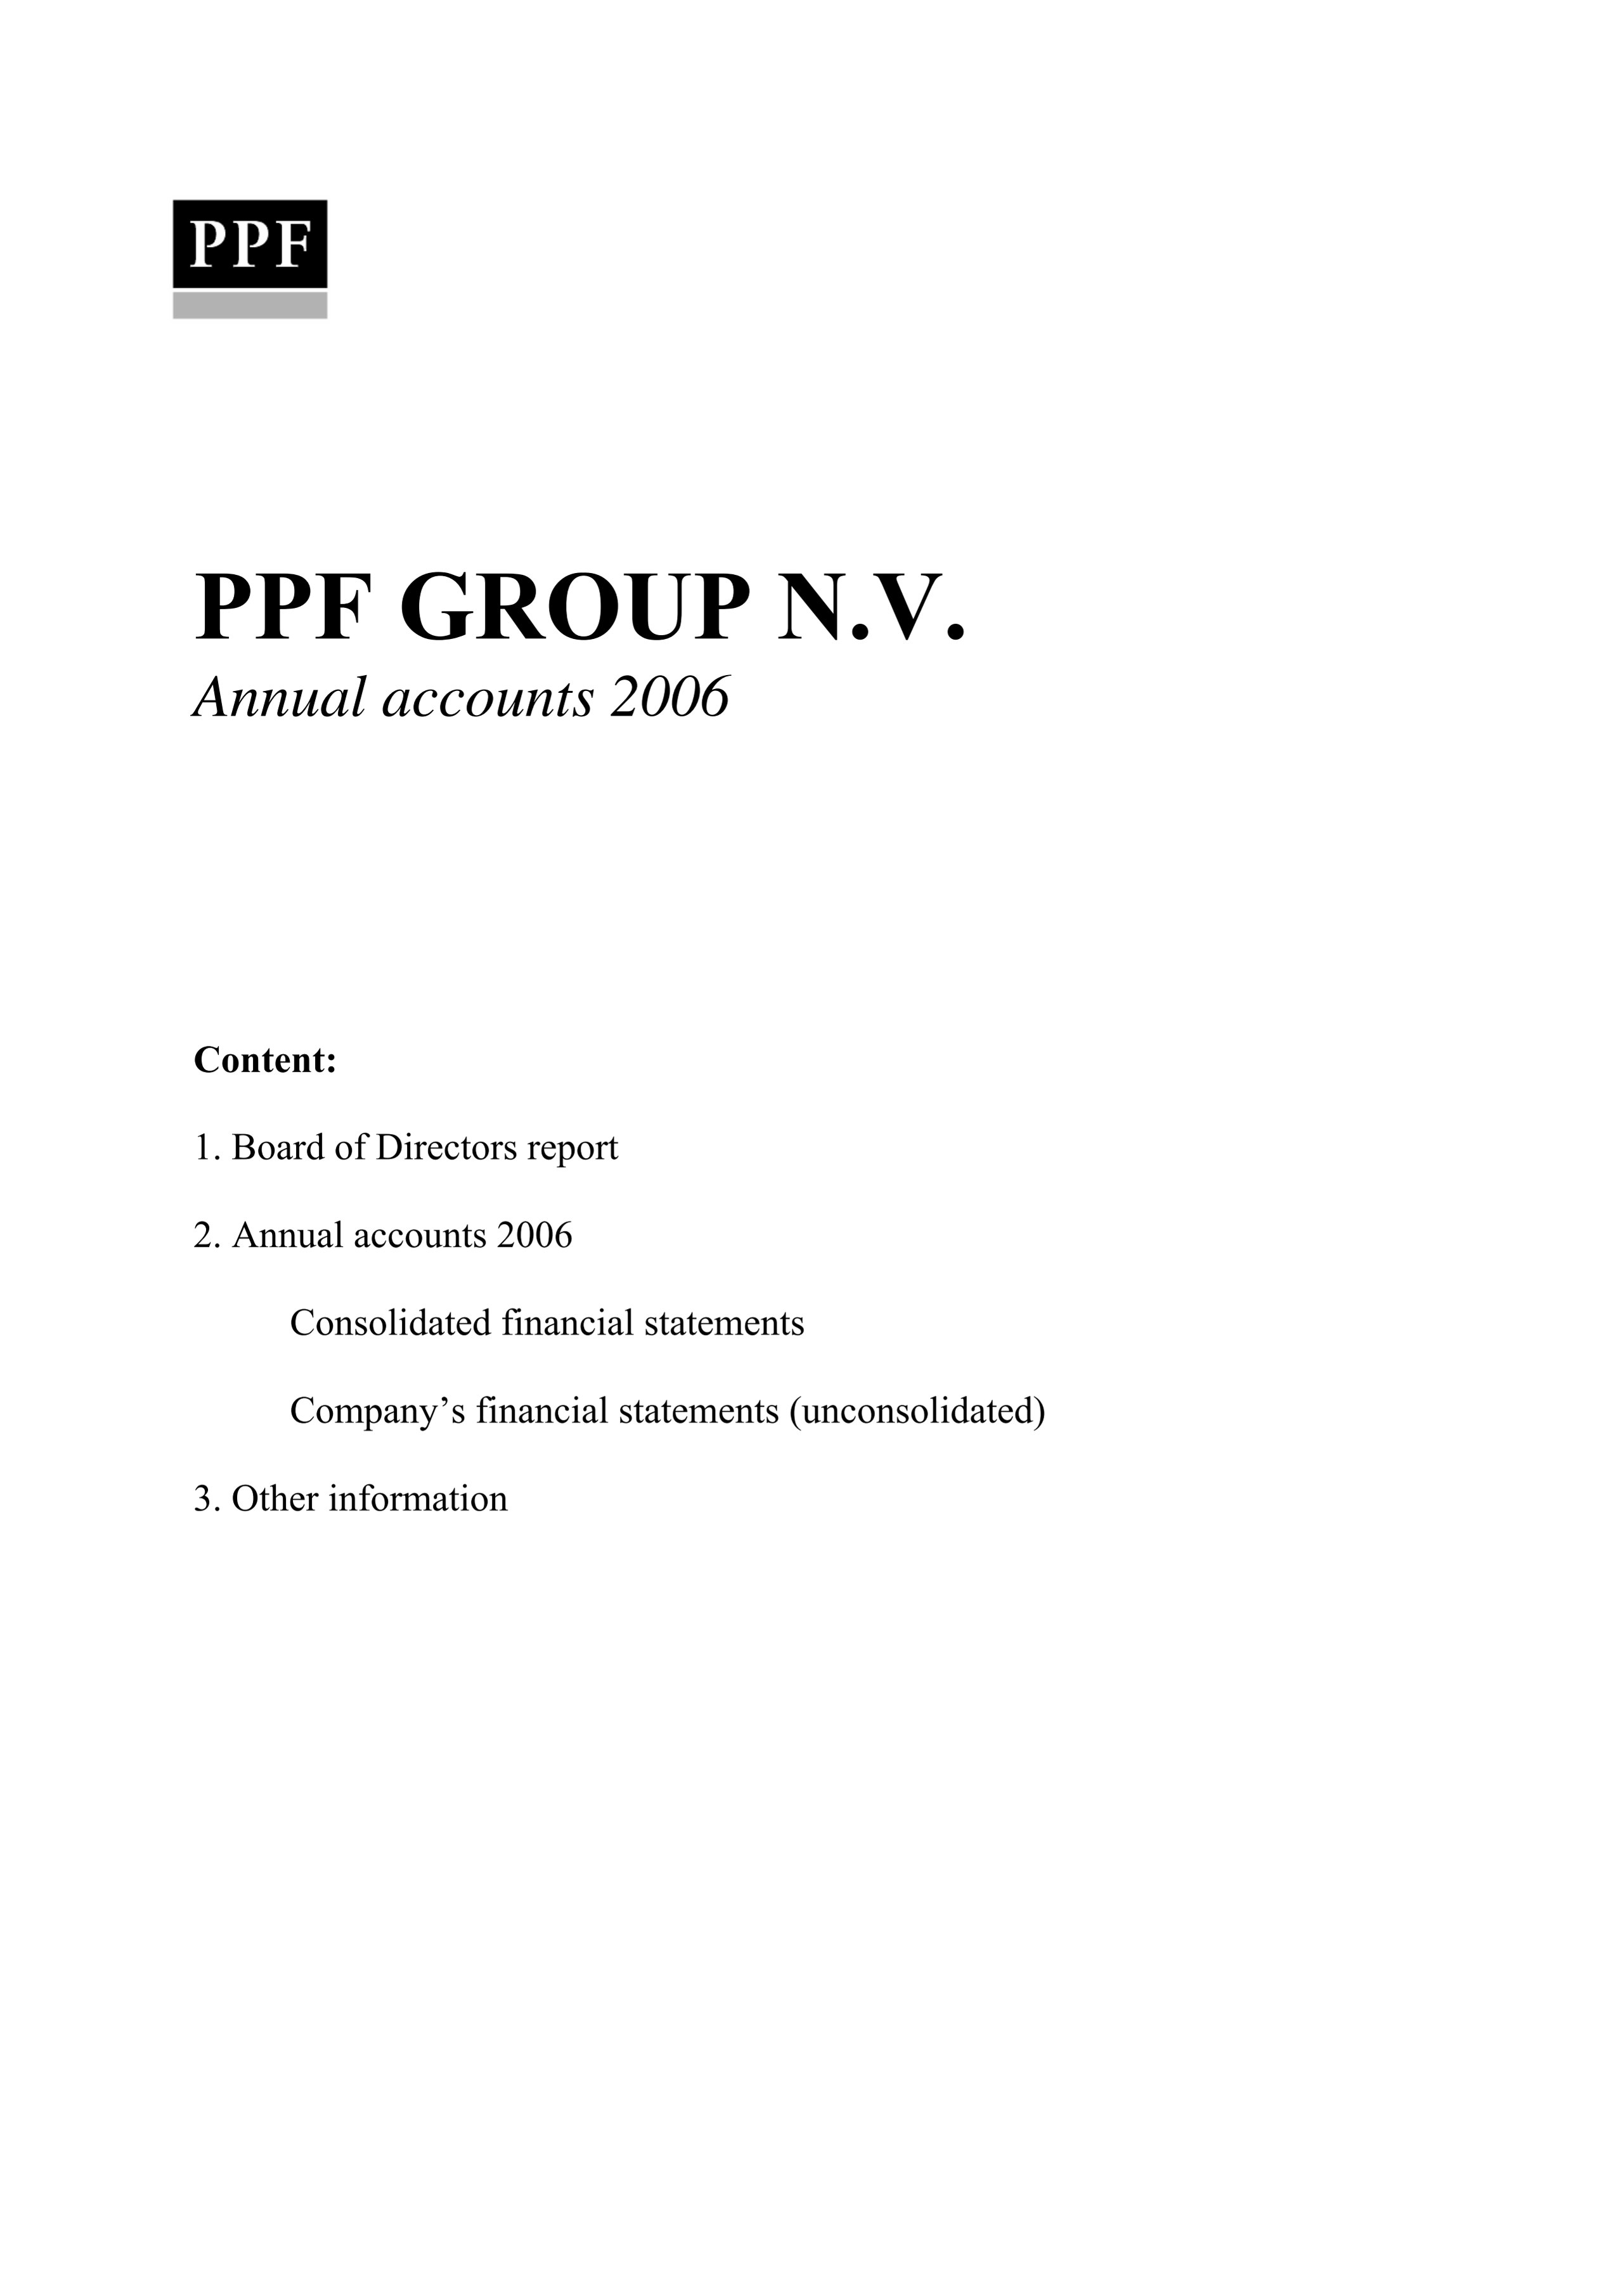 Annual Accounts PPF Group N.V. 2006 (30/5/2006)